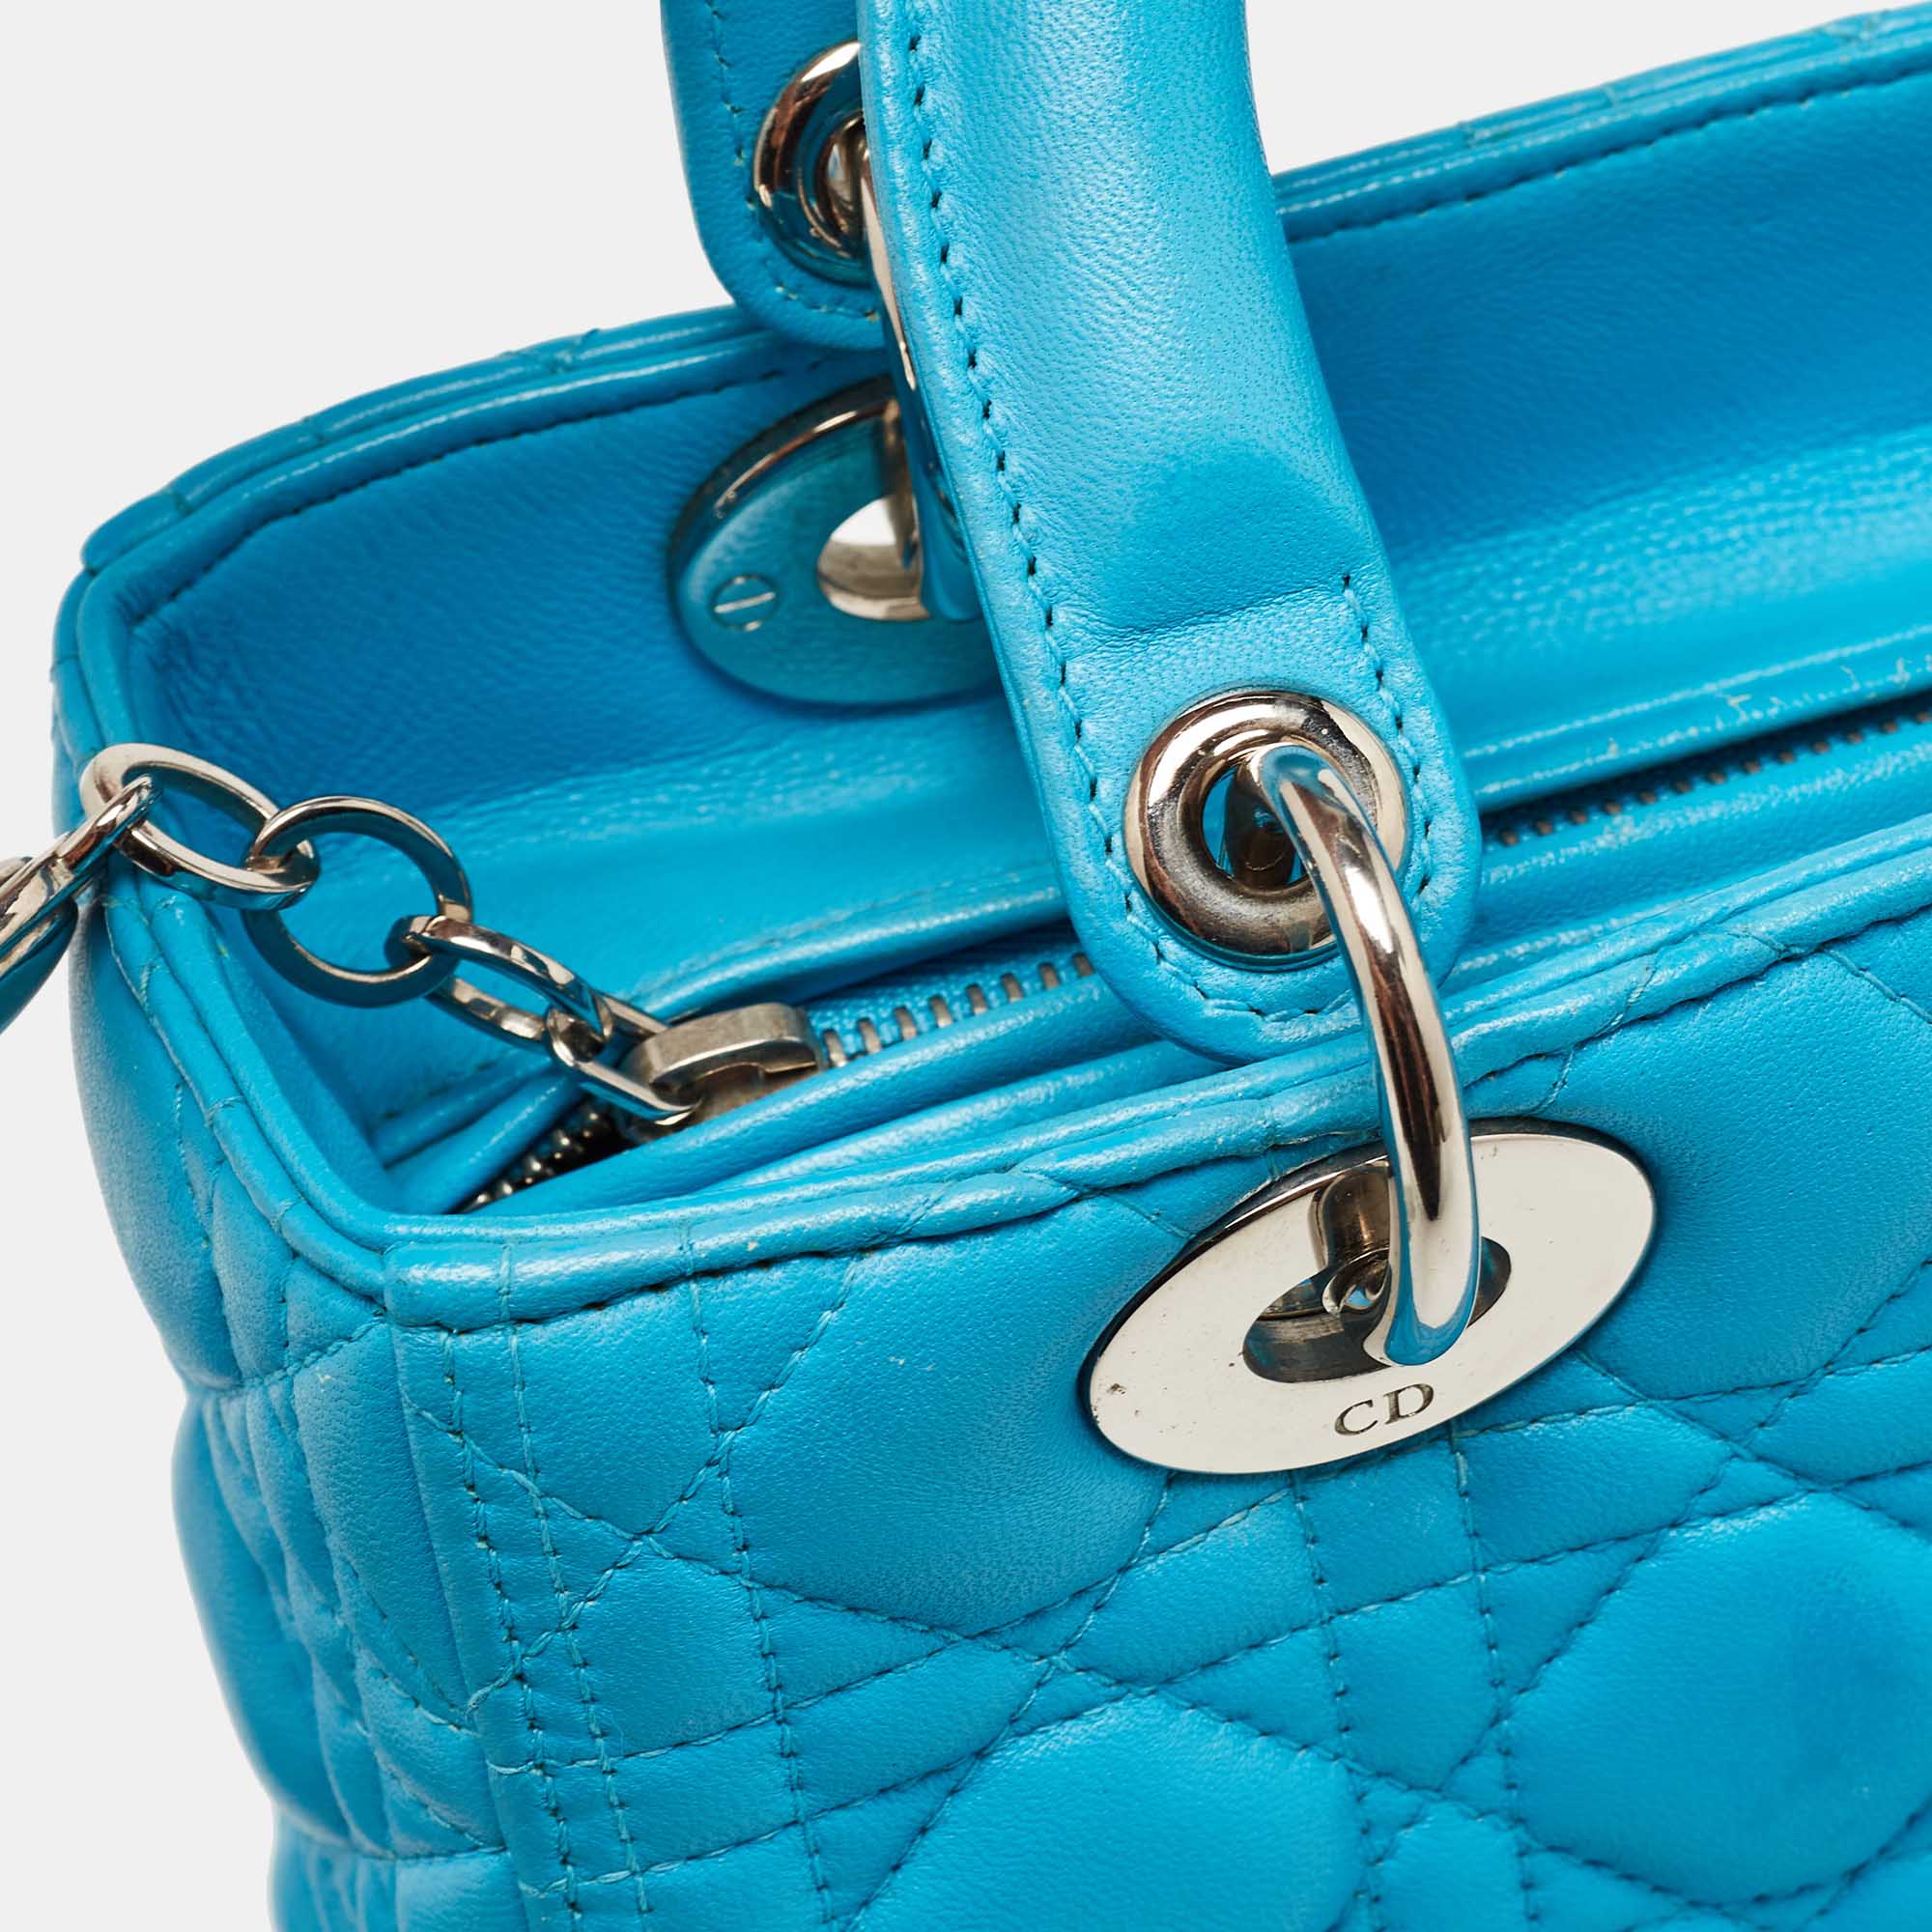 Dior Blue Cannage Leather Medium Lady Dior Tote